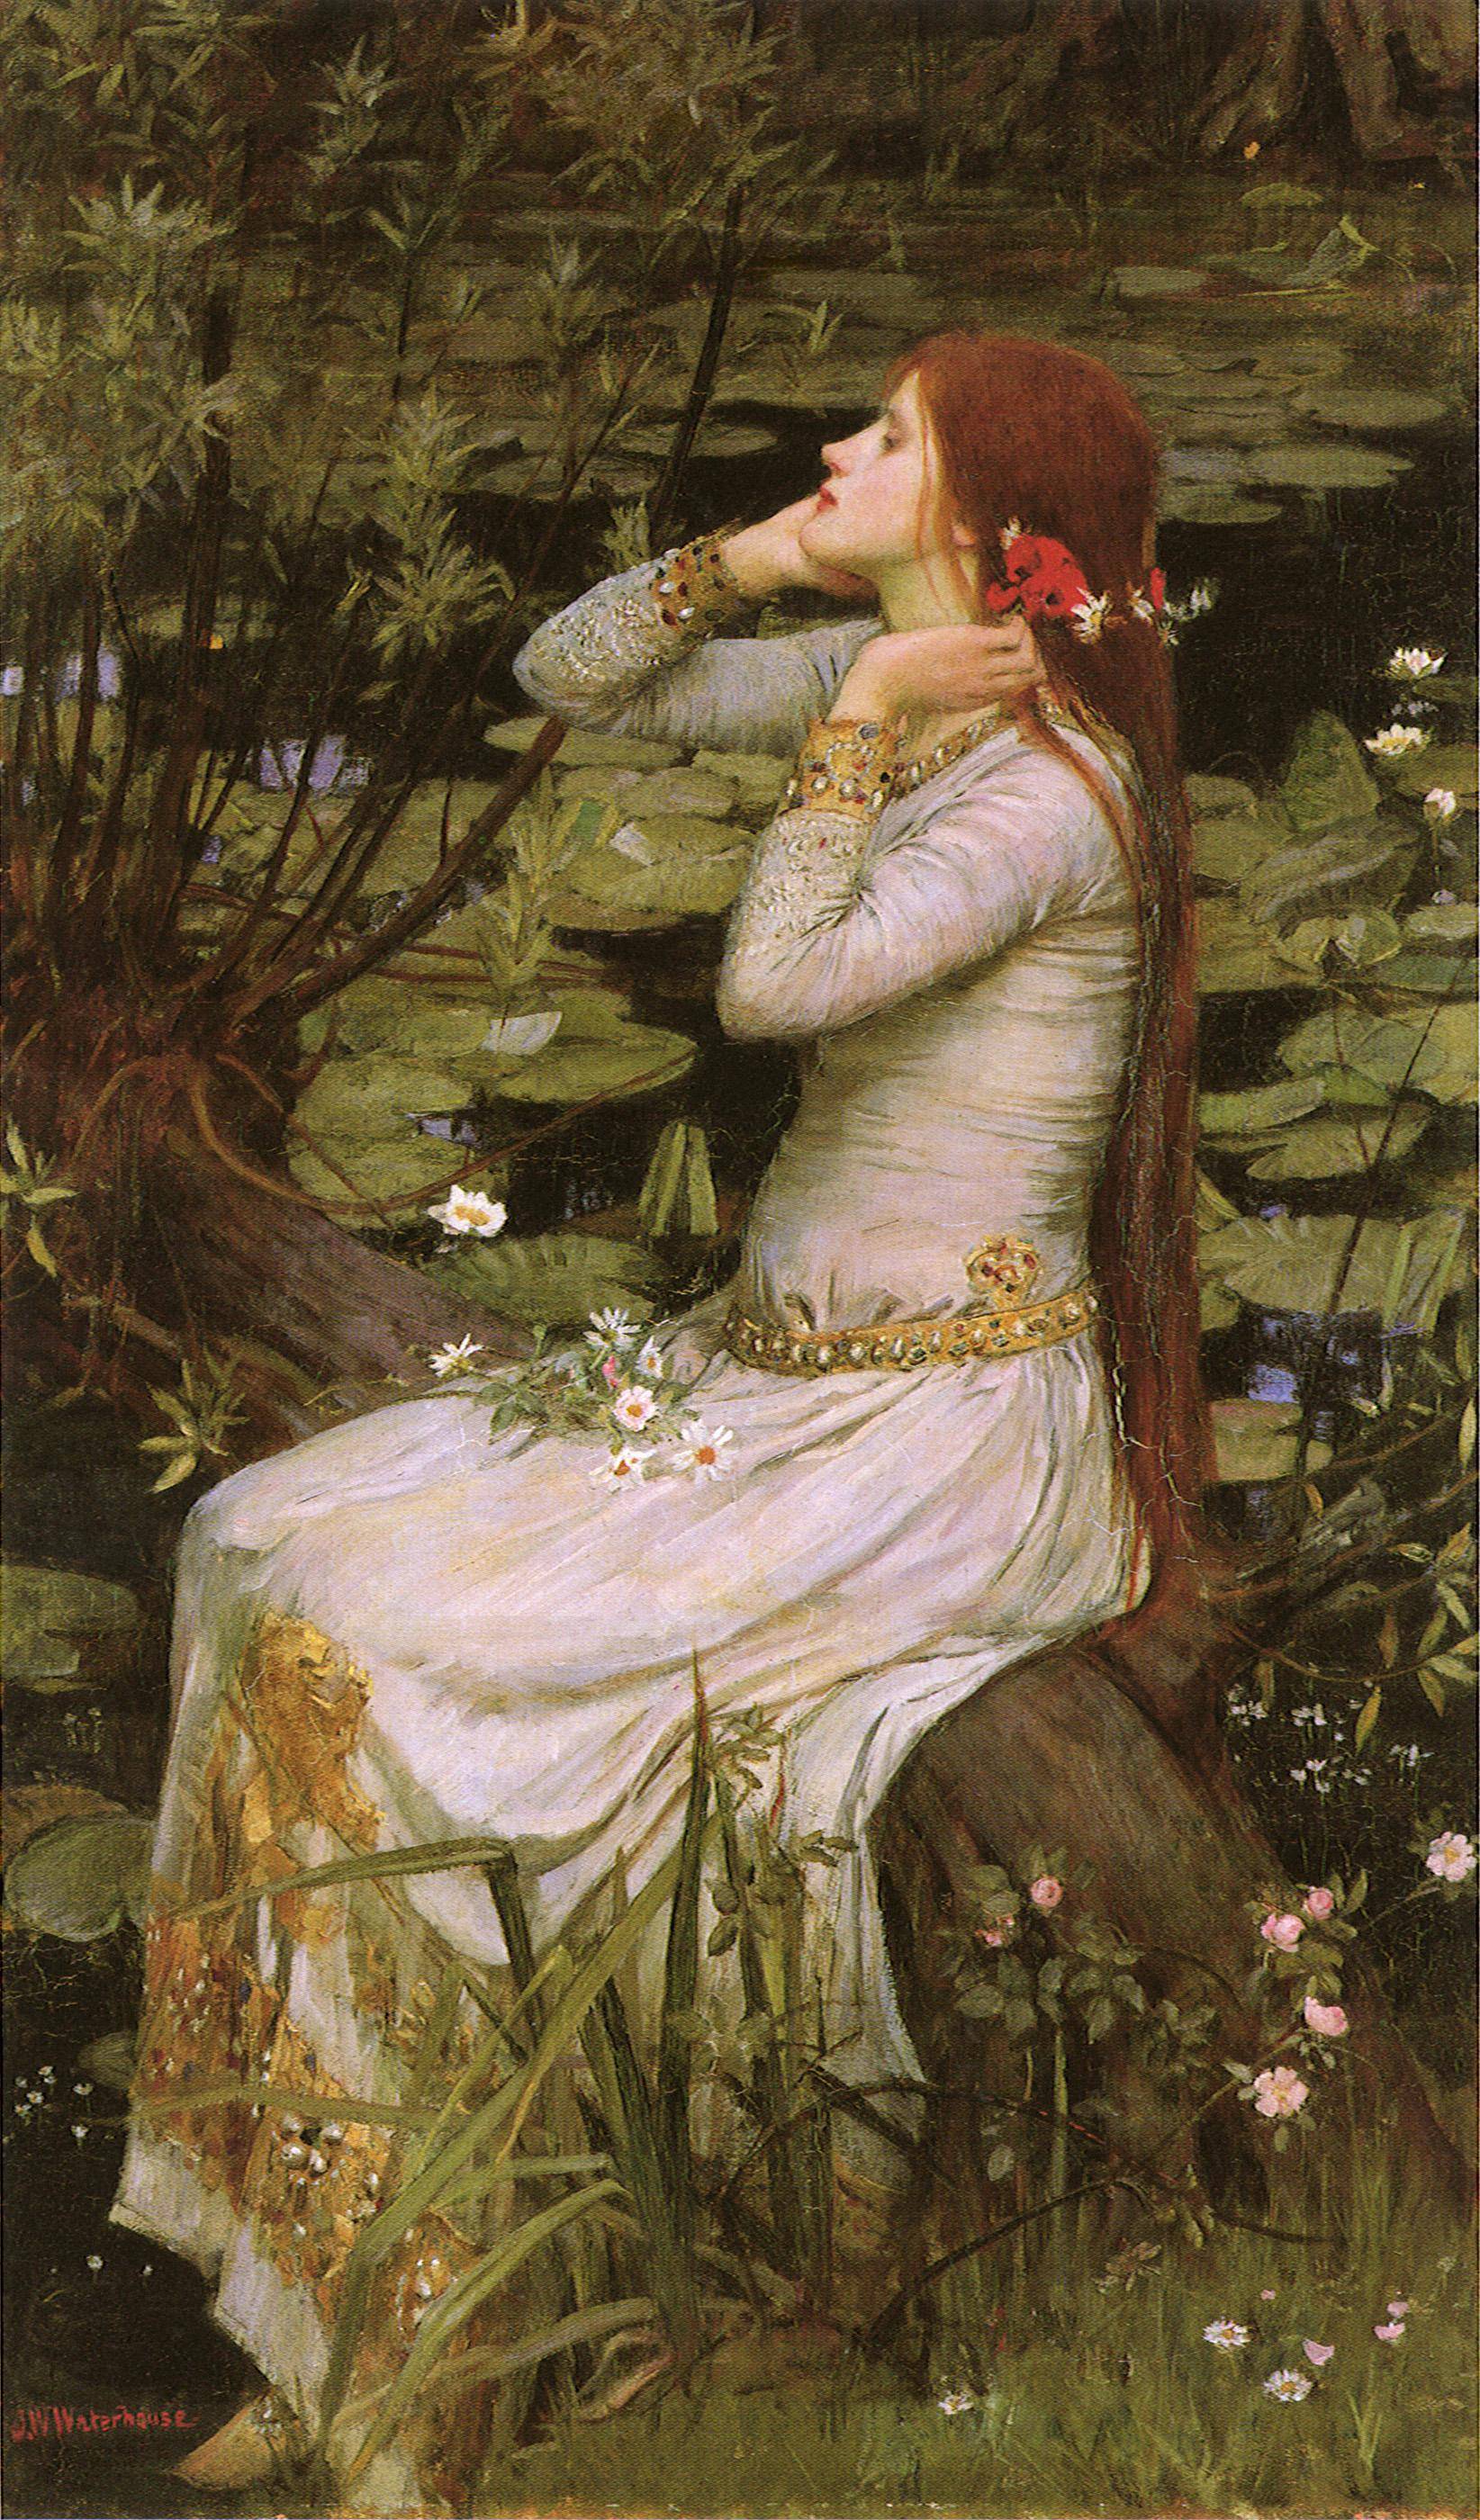 John William Waterhouse (1894)